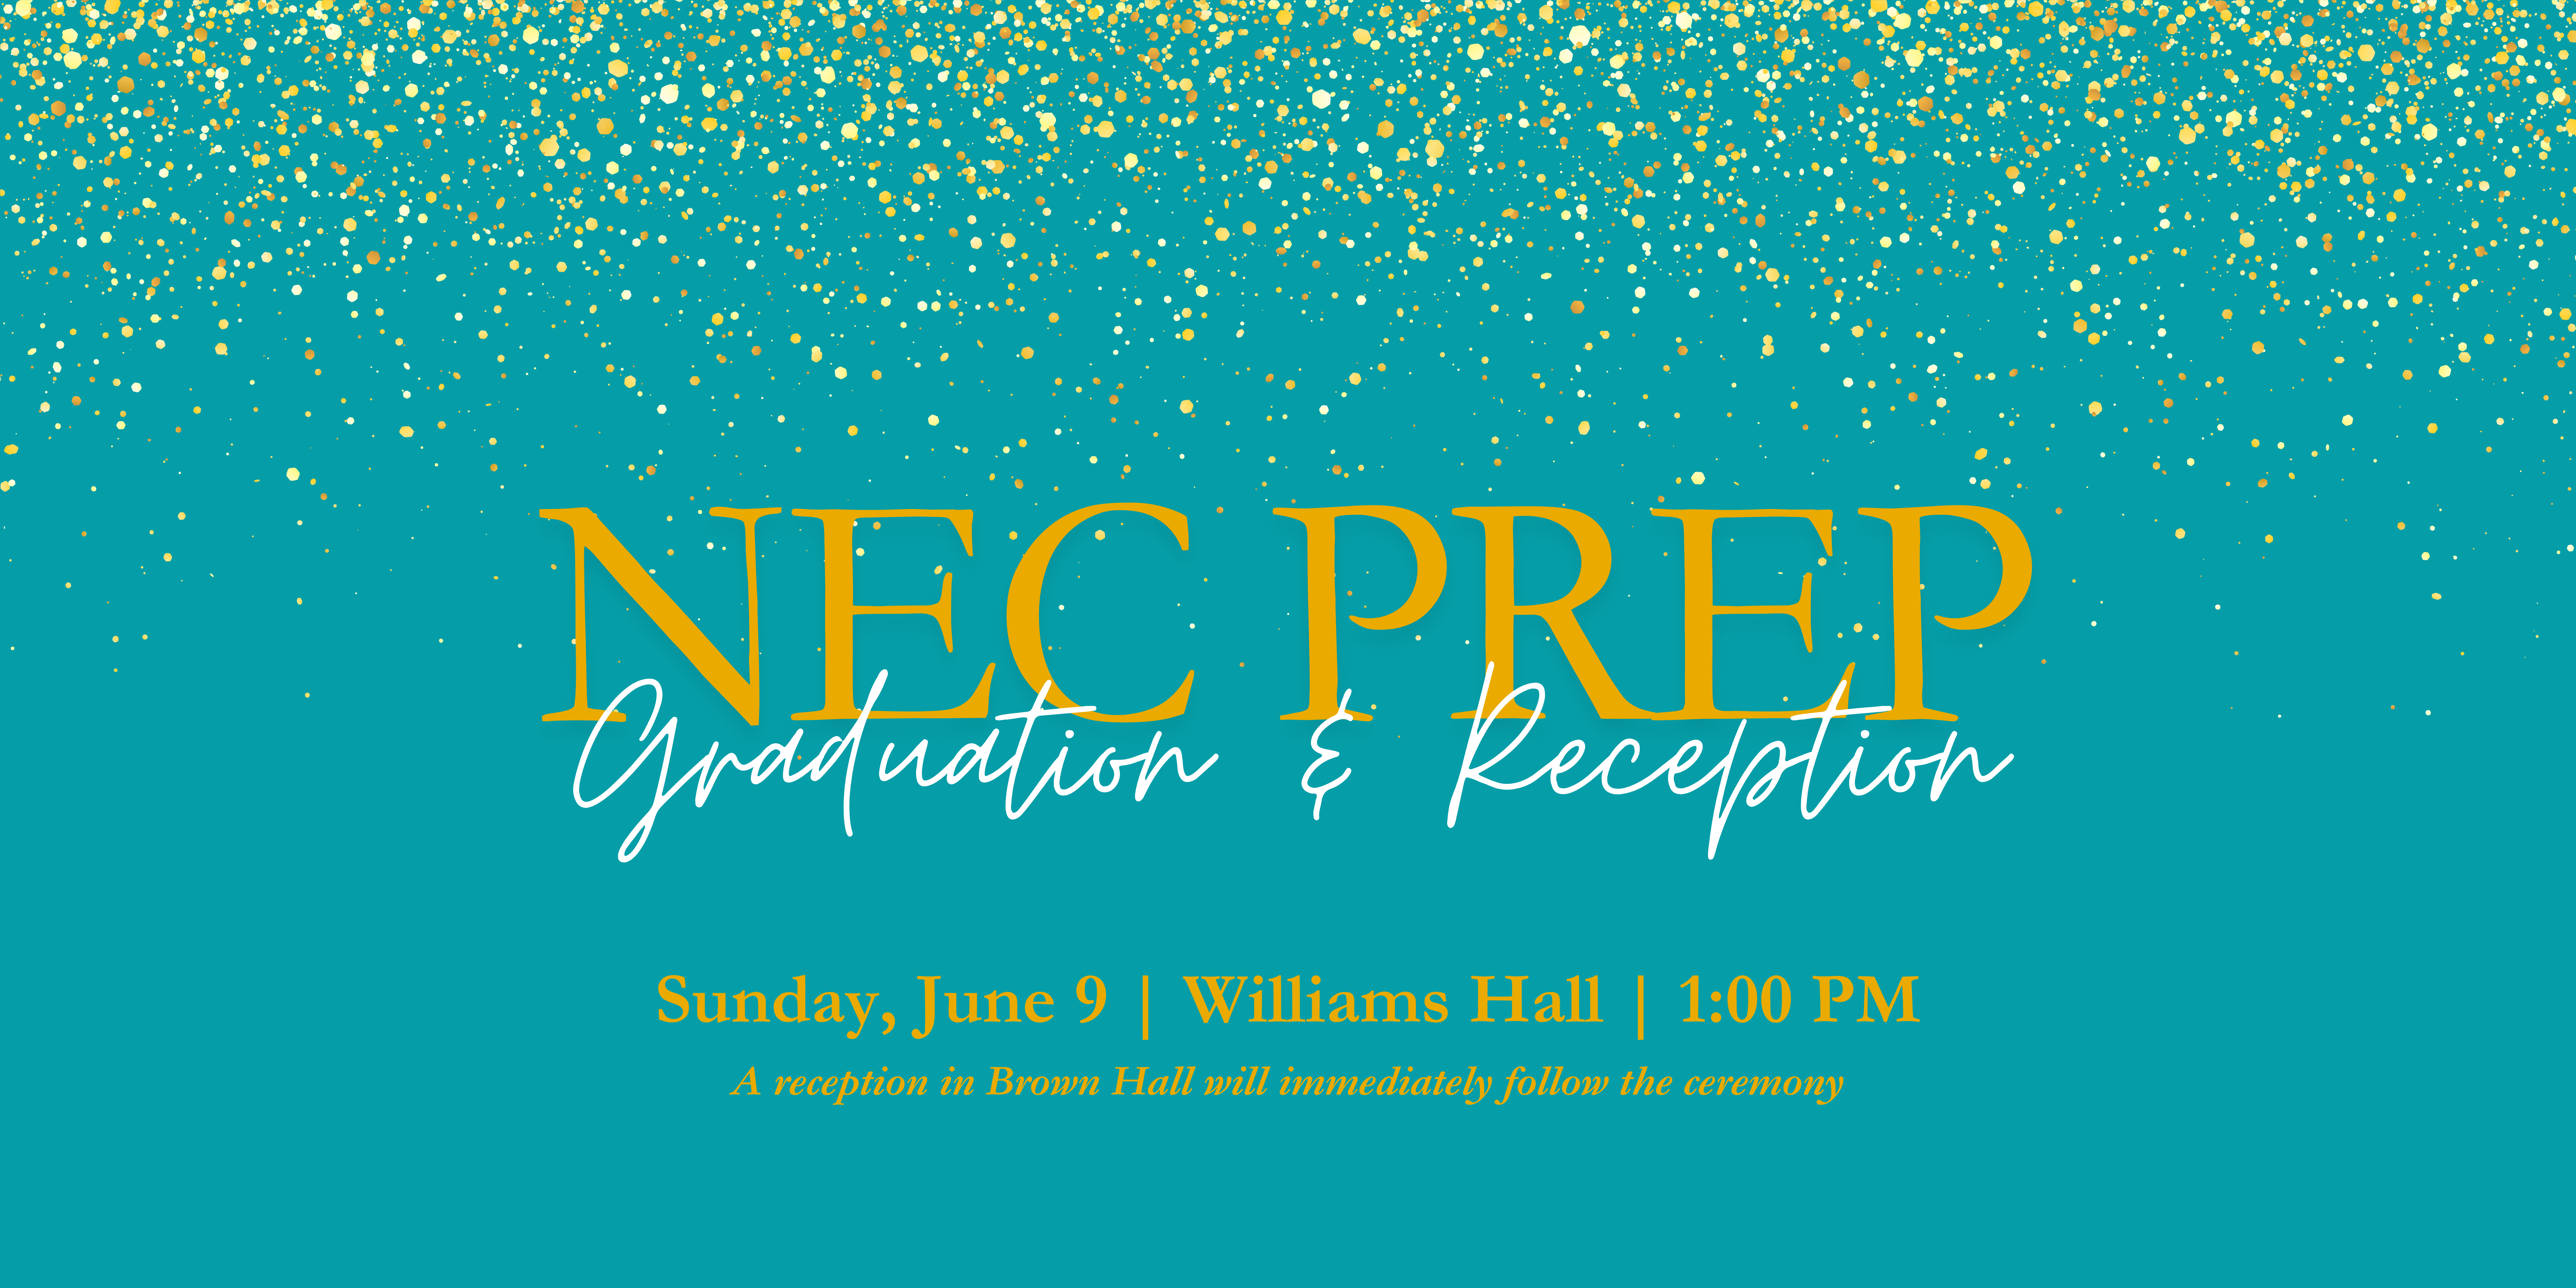 NEC Prep Graduation & Reception